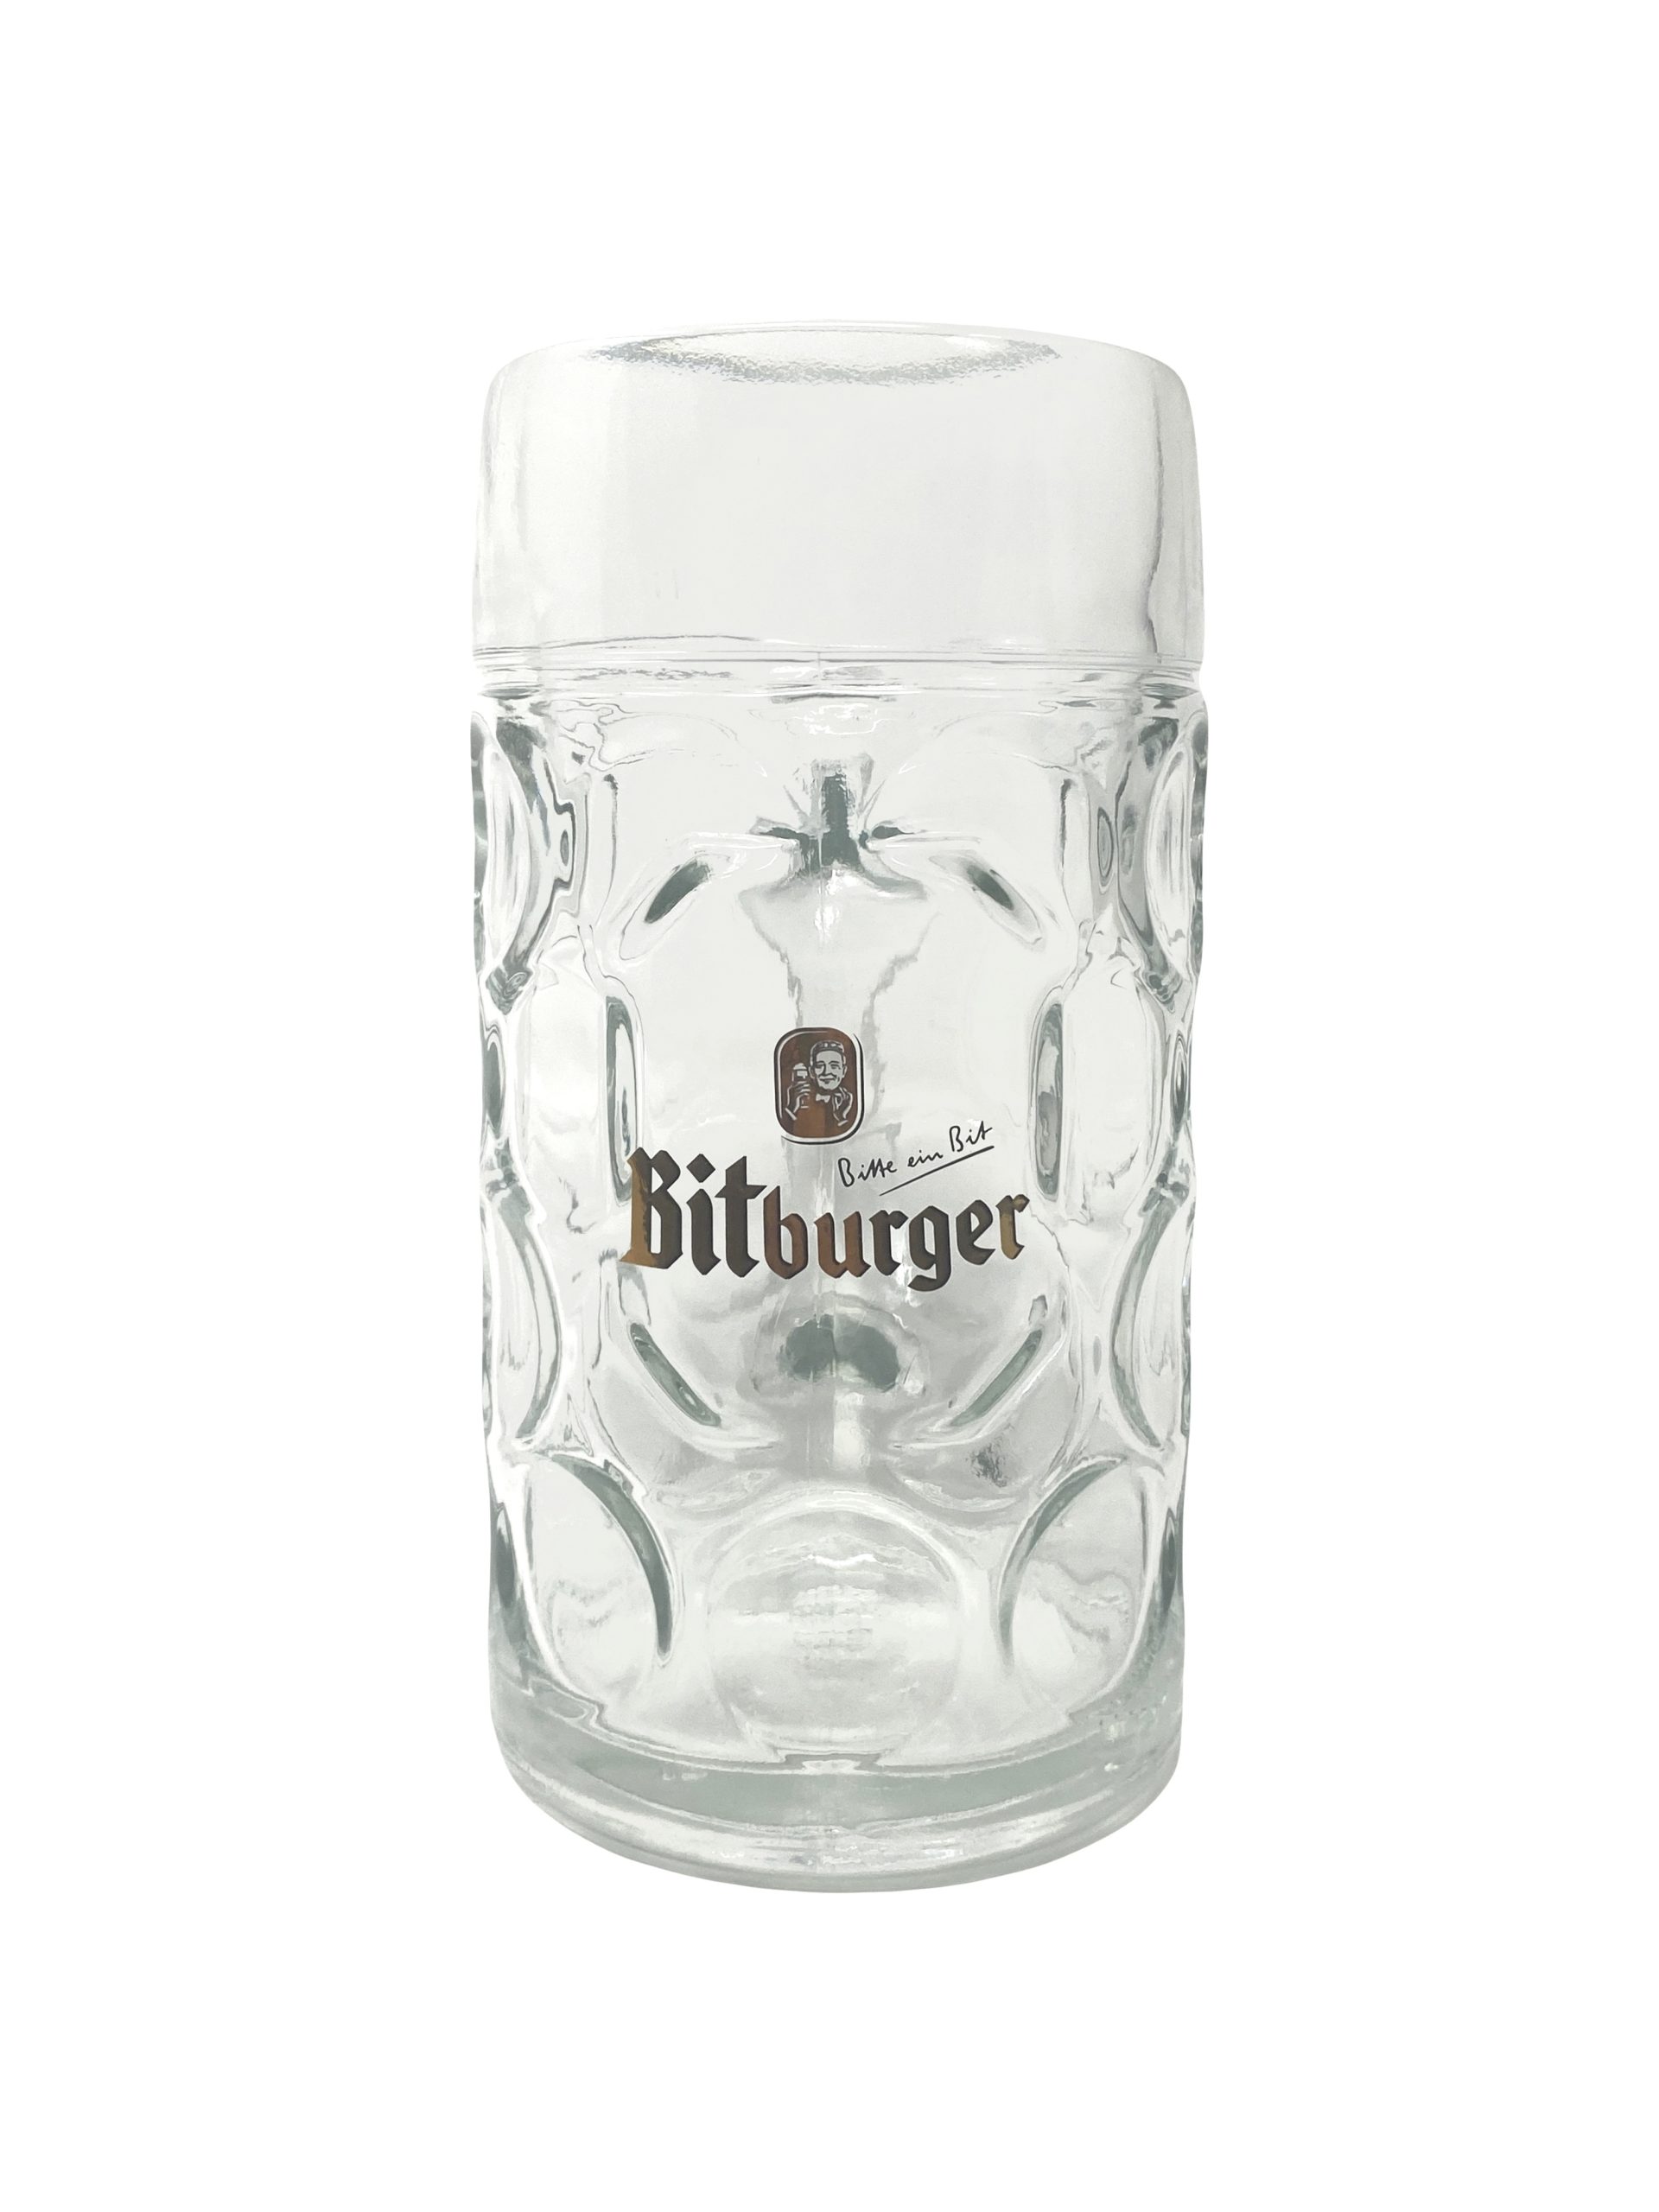 Bitburger Stein Tankard Beer Glass